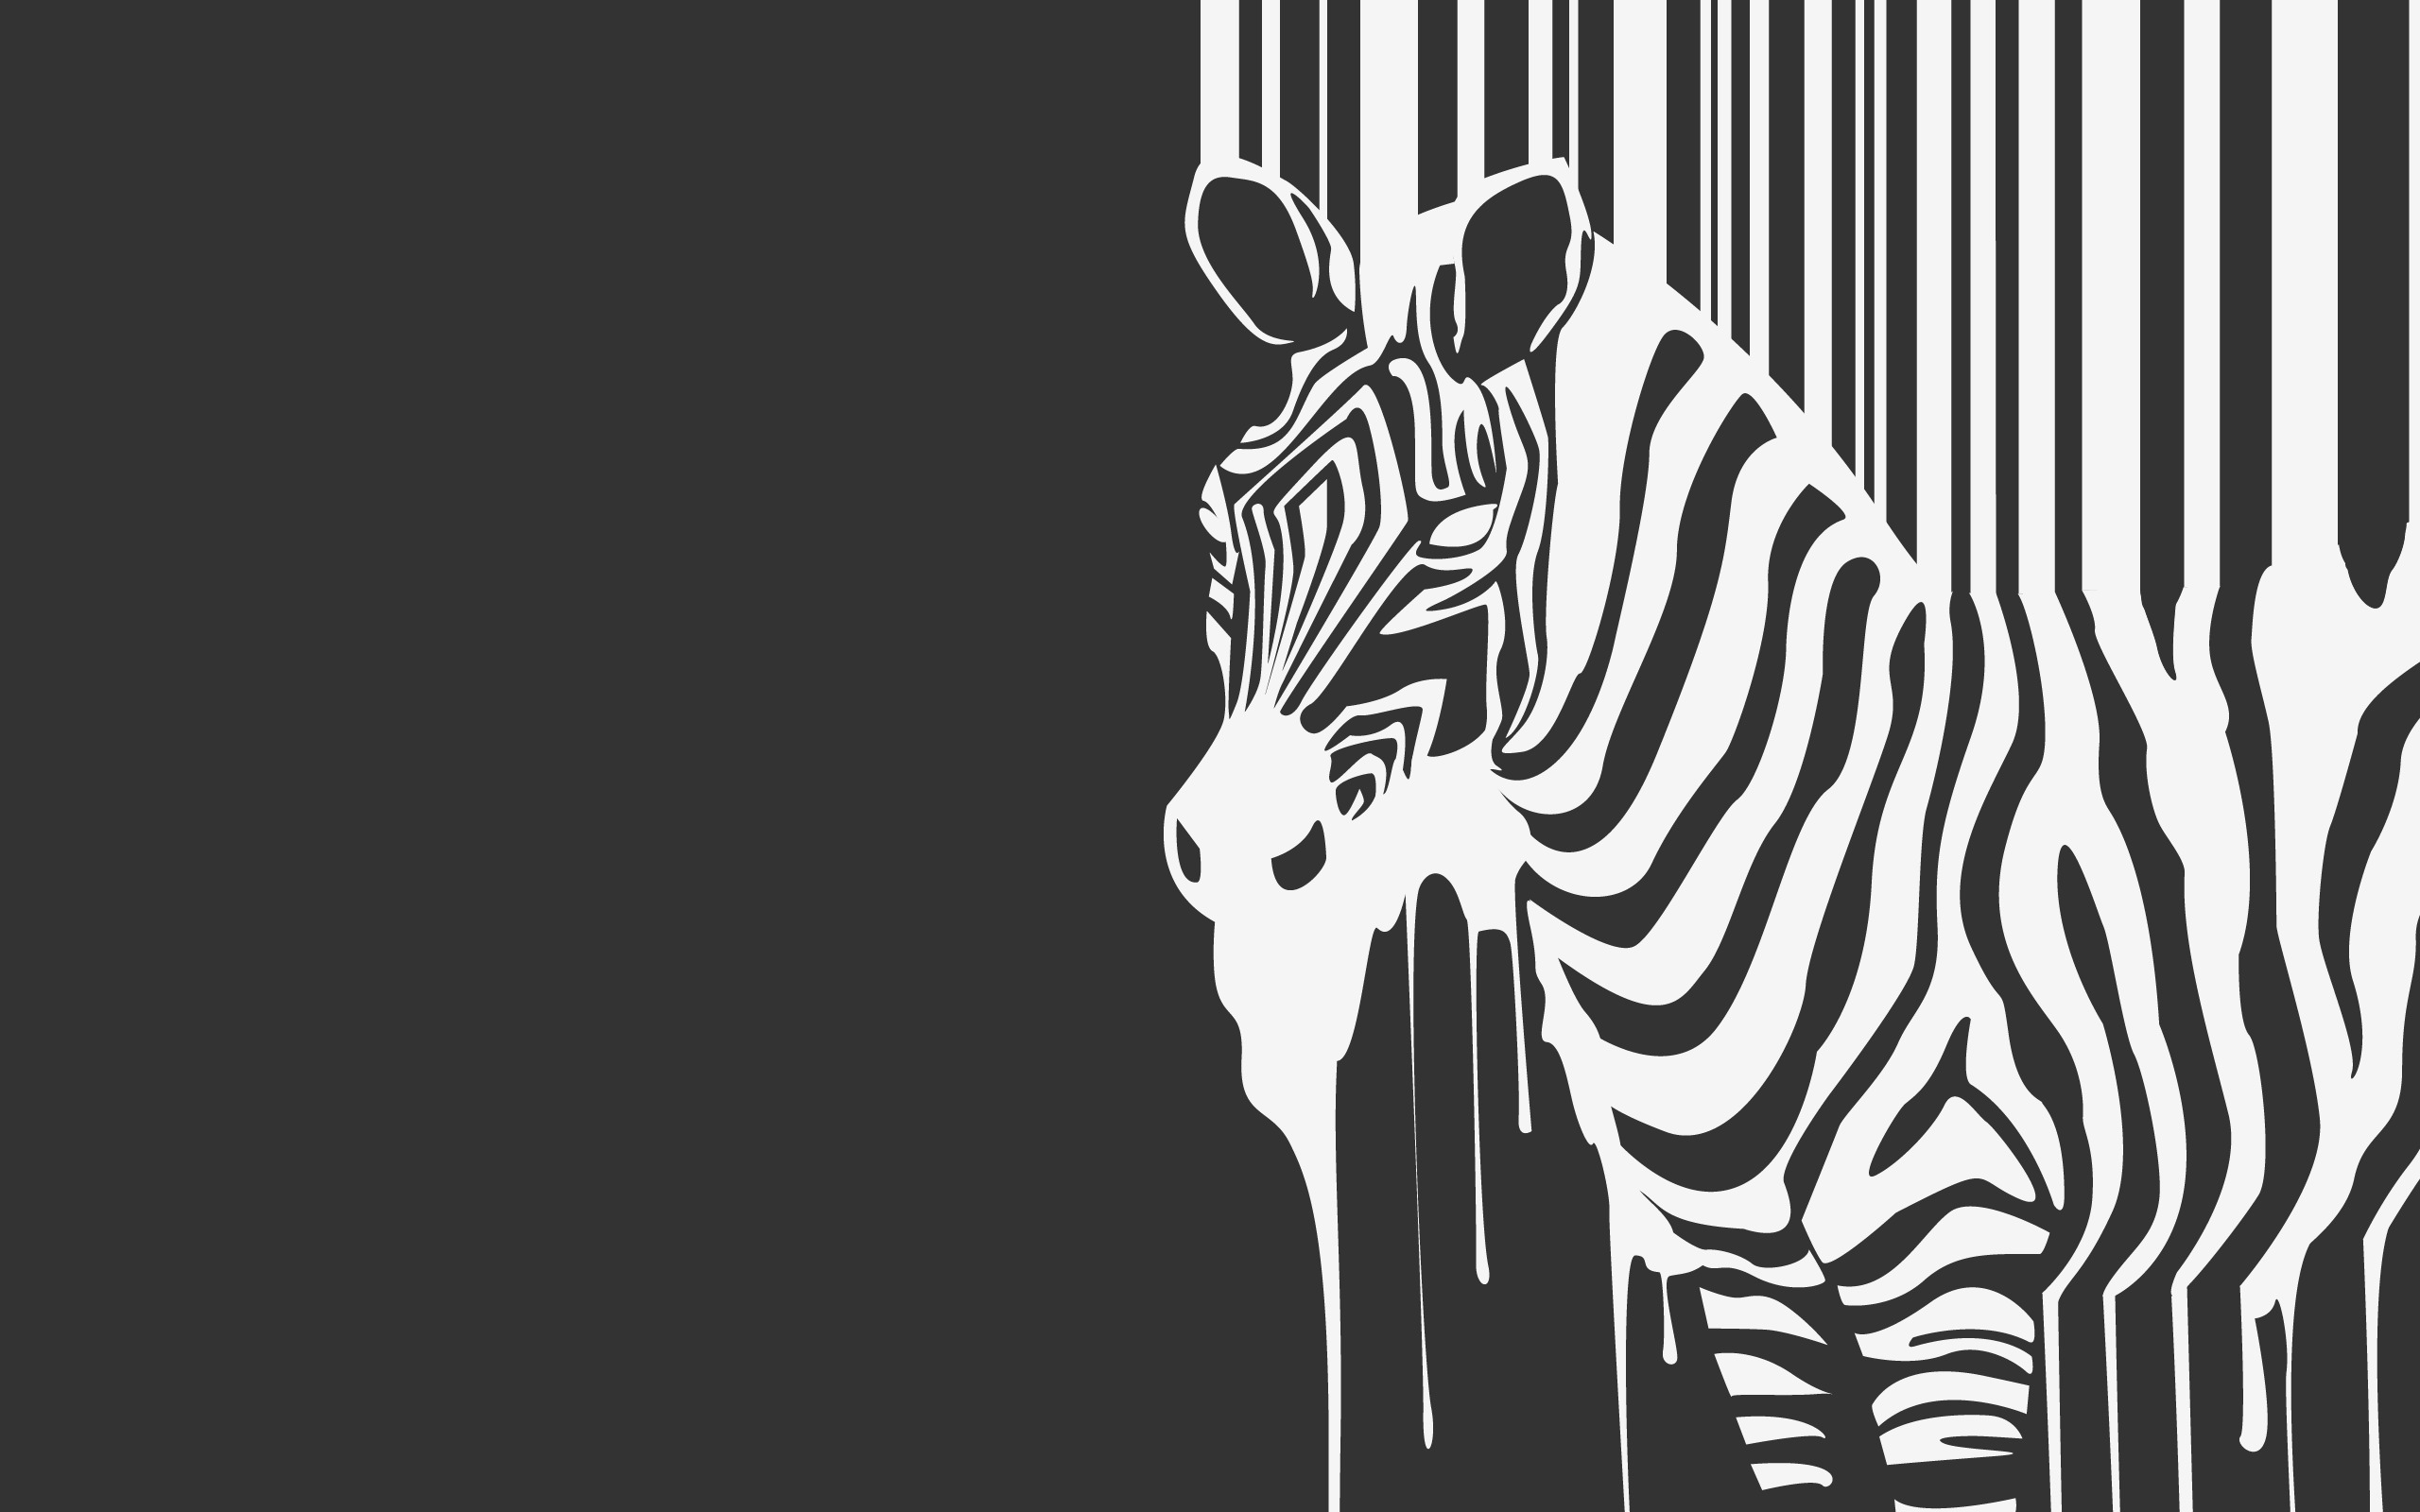 Zebra Wallpaper HD